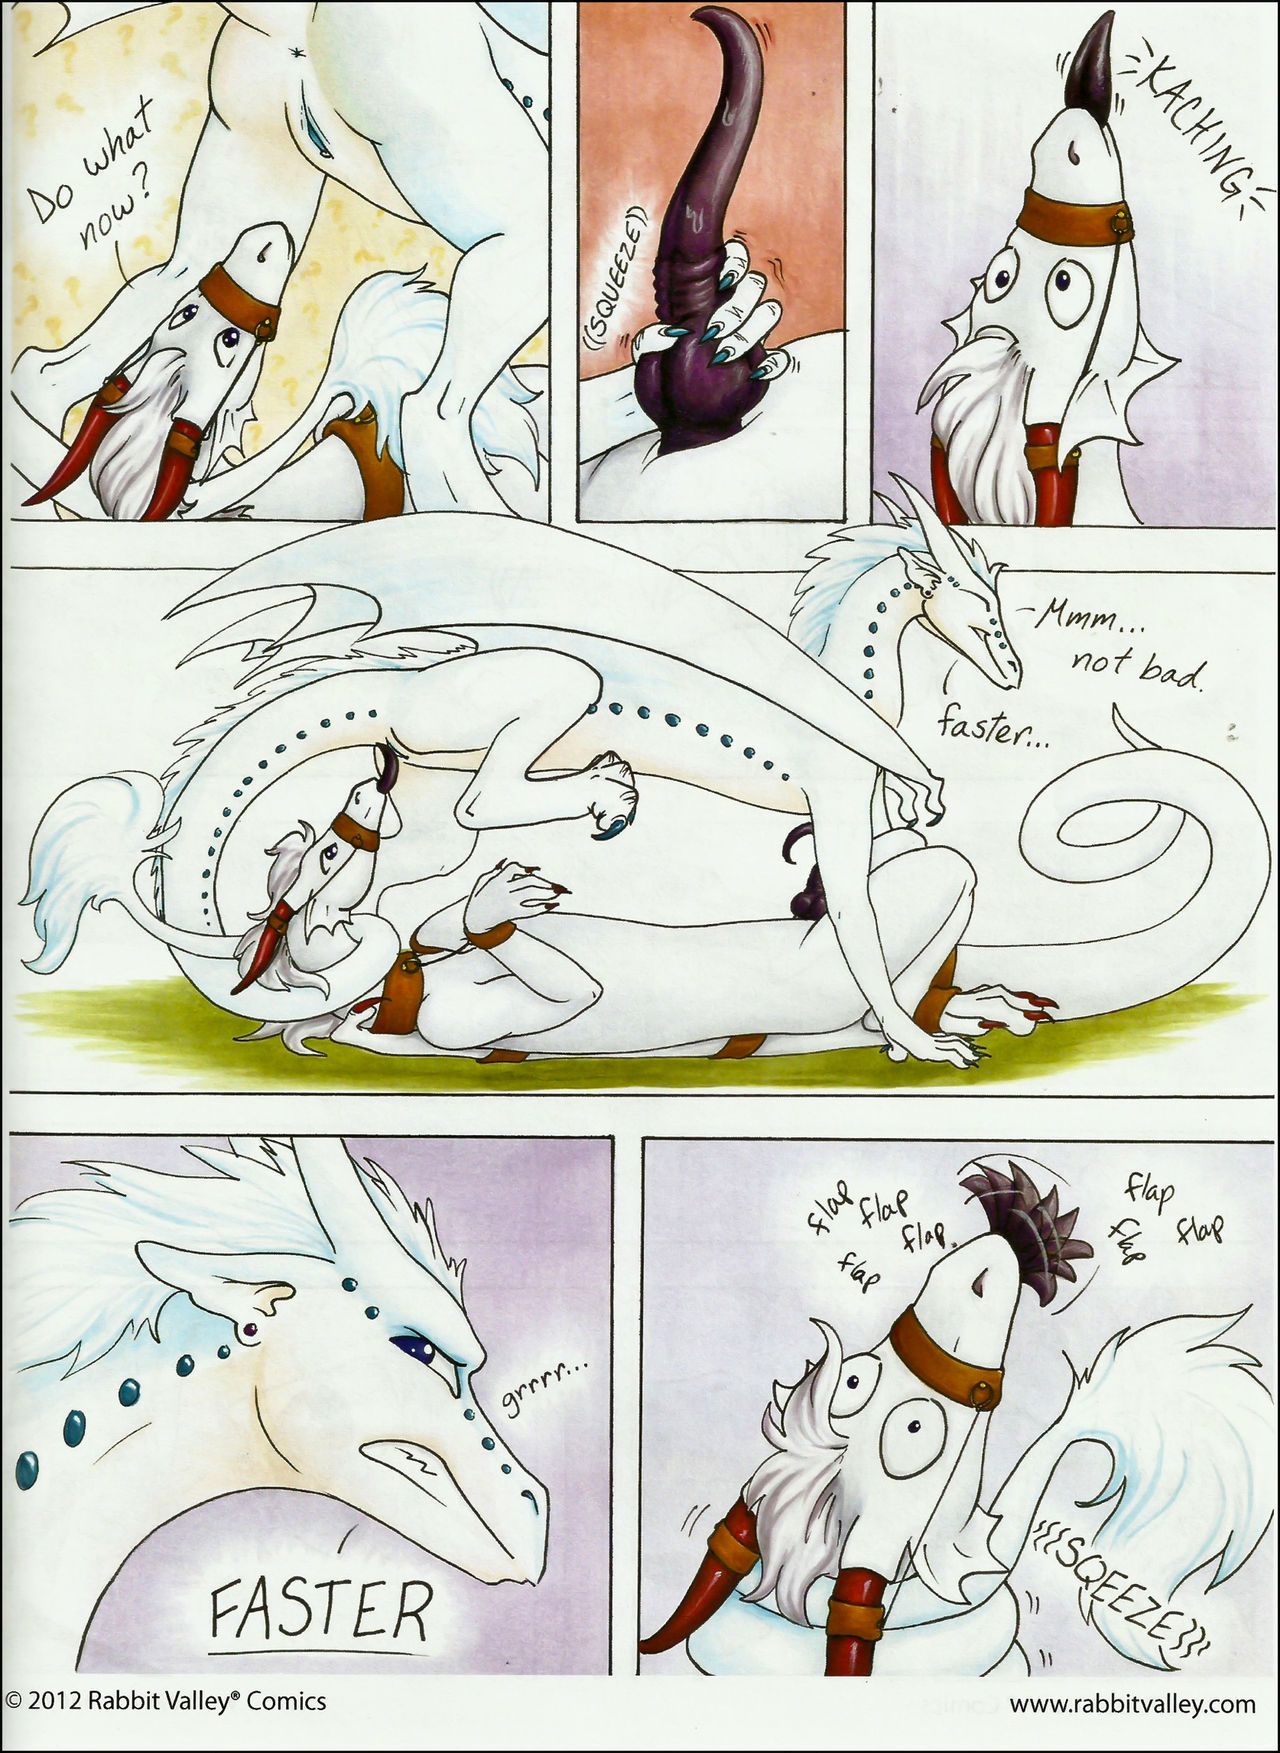 dragon\'s hoard volumen 2 (composition de diferentes artists)